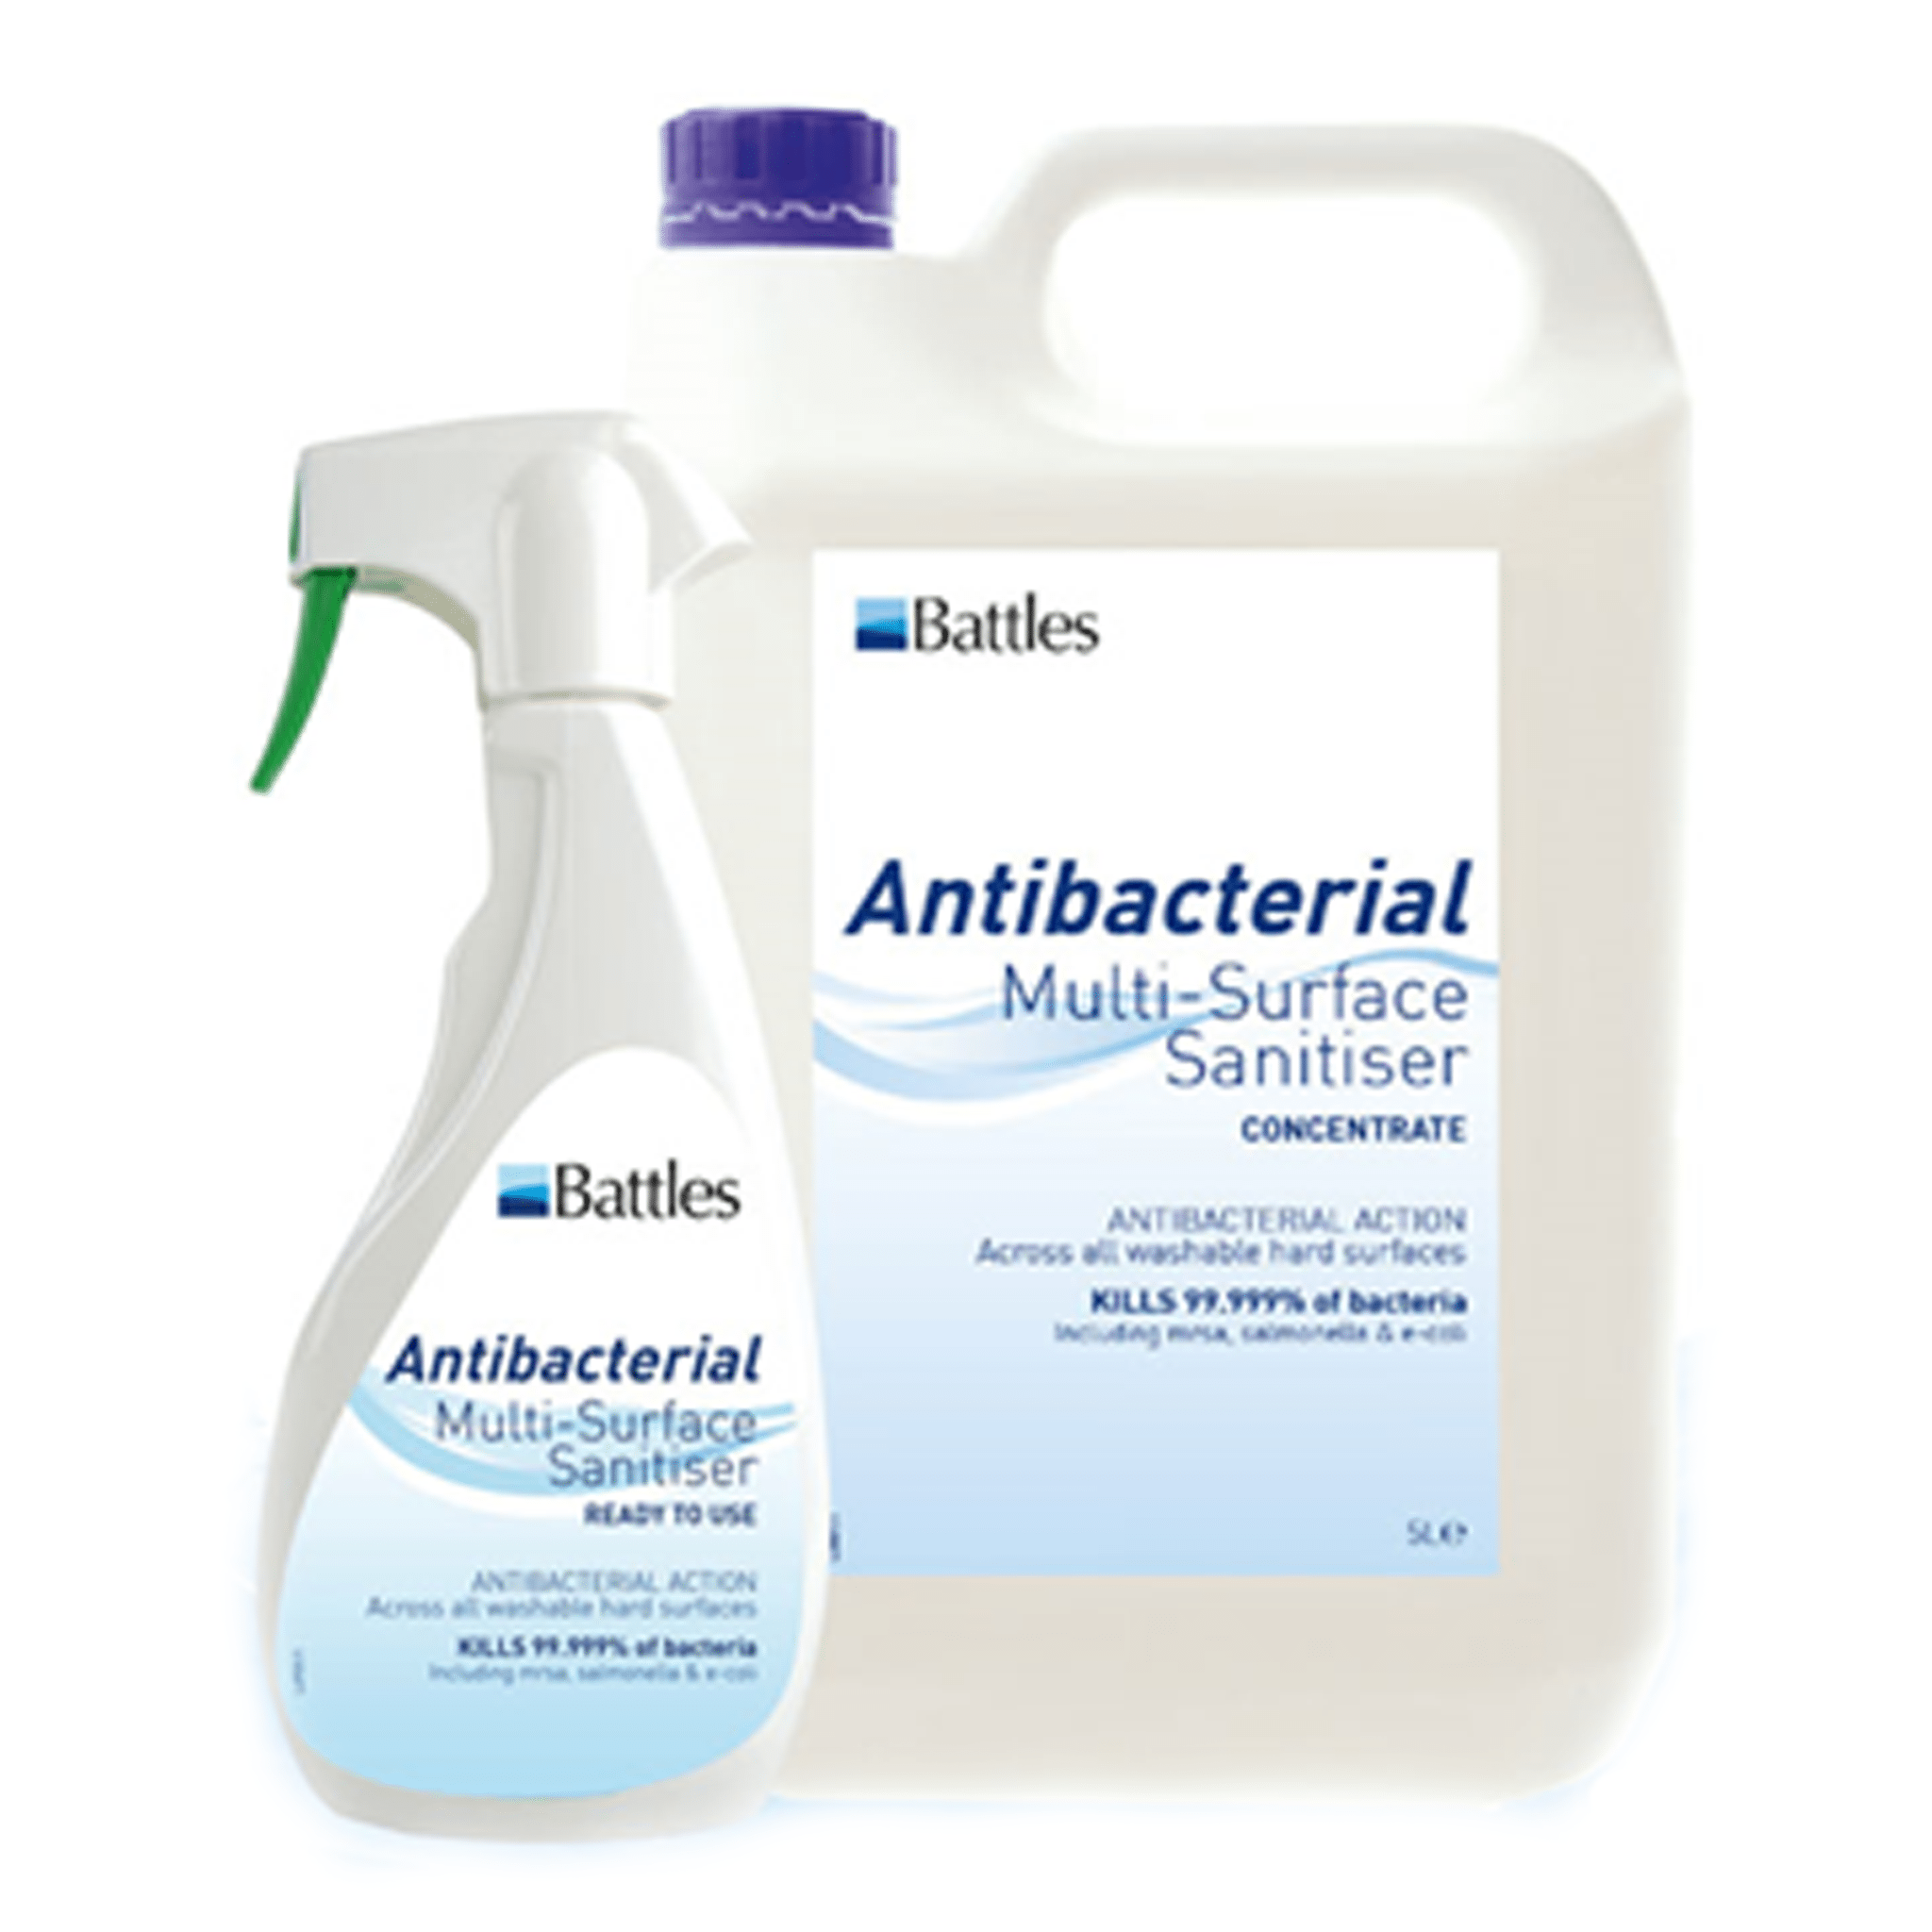 Battles Anti-Bacterial Multi-Surface Sanitiser